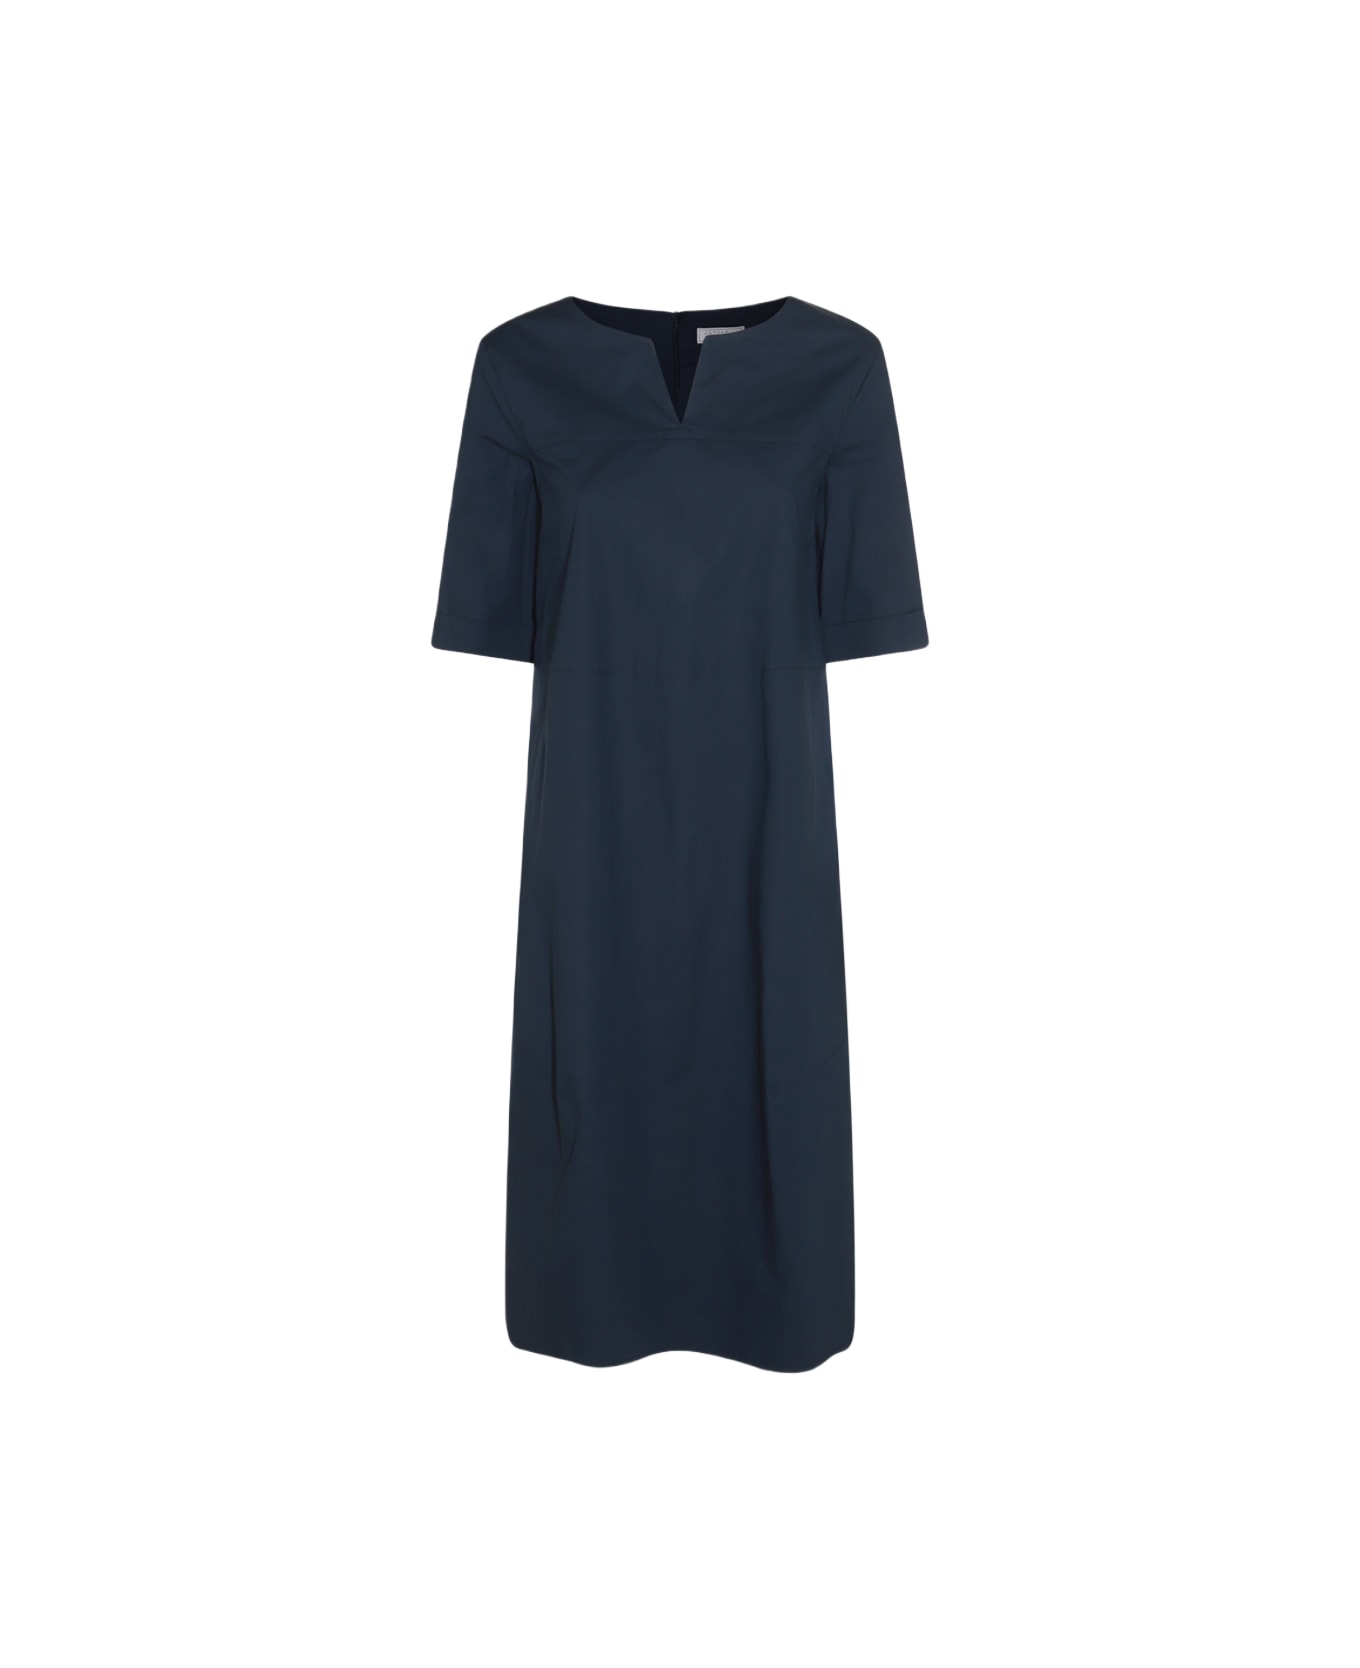 Antonelli Navy Blue Cotton Dress - Blue